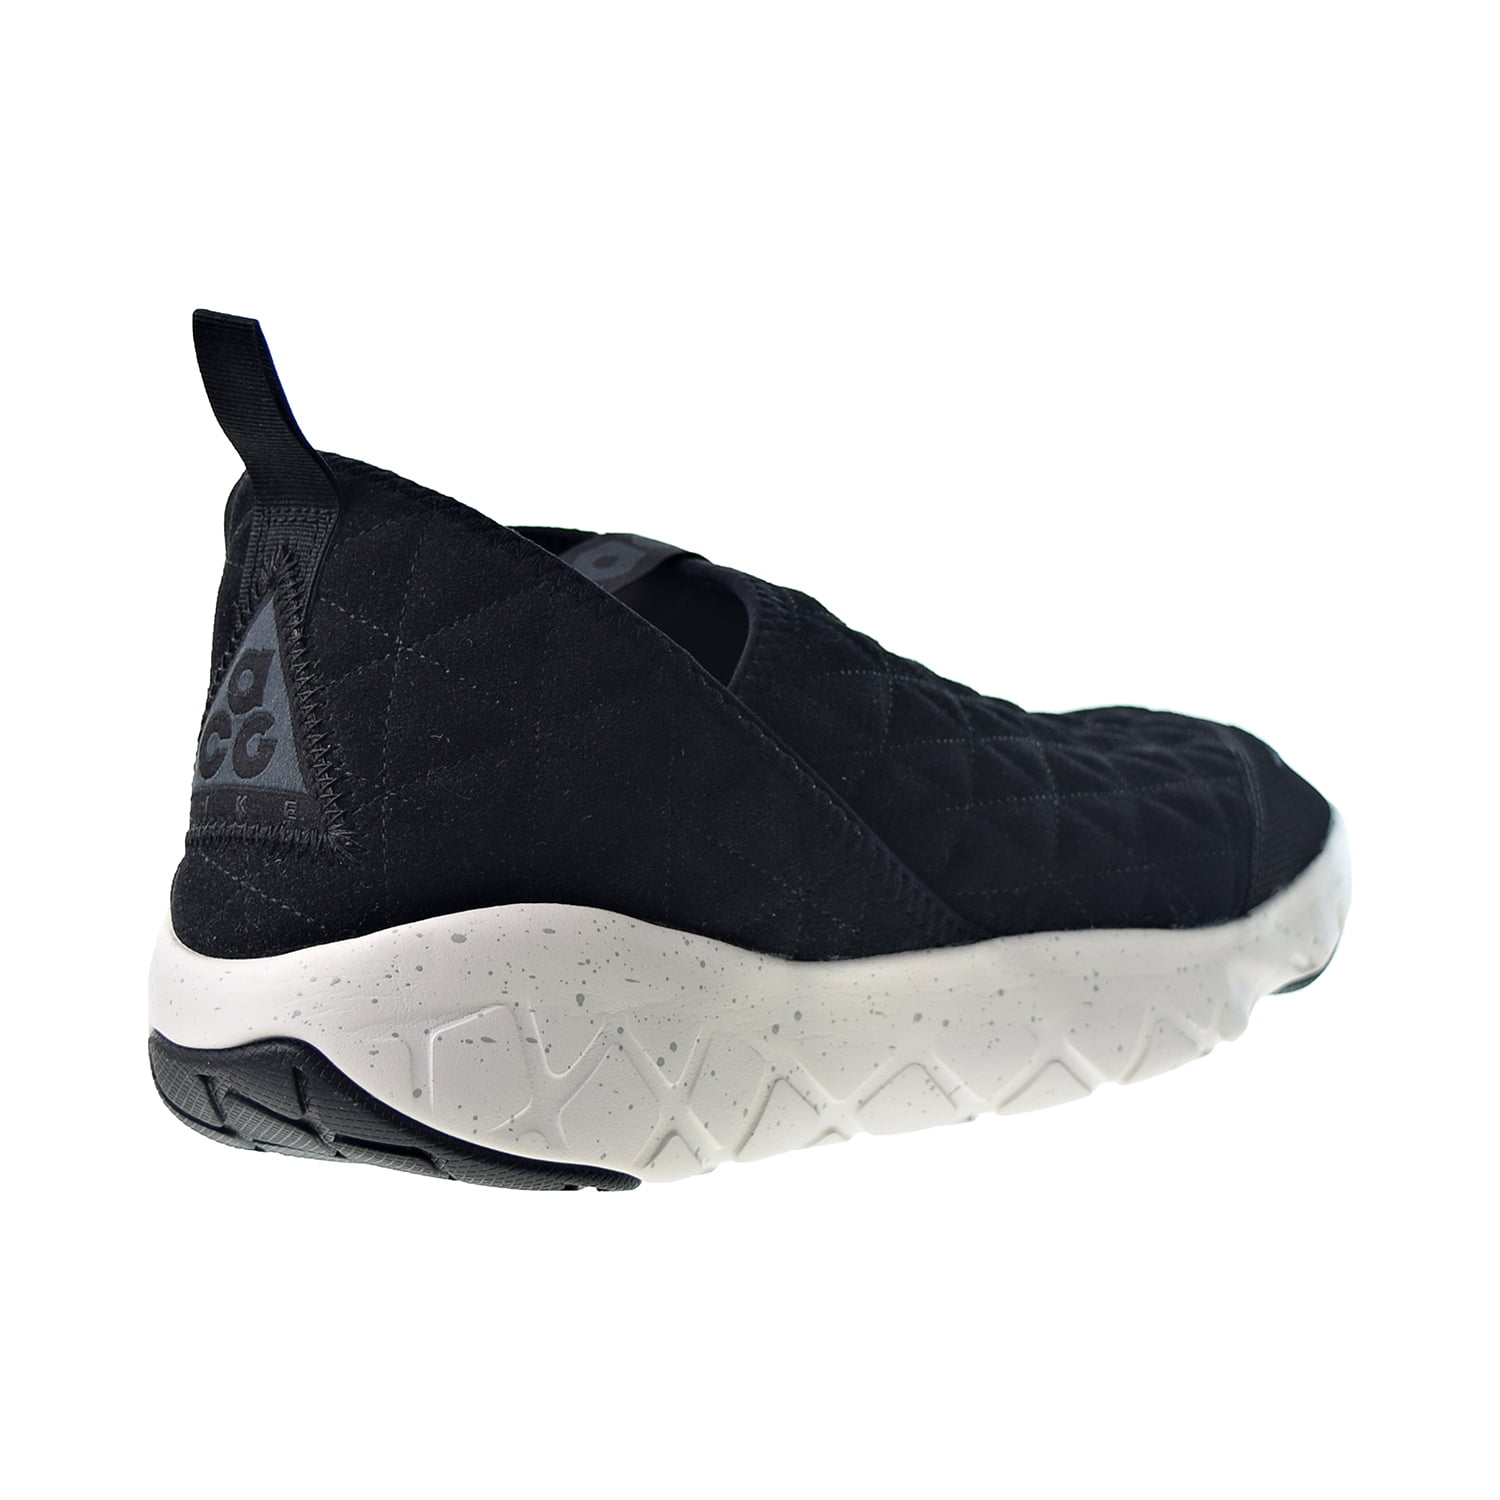 ruw Dwars zitten wildernis Nike ACG MOC 3.0 Leather Men's Shoes Black-Anthracite ct2896-001 -  Walmart.com